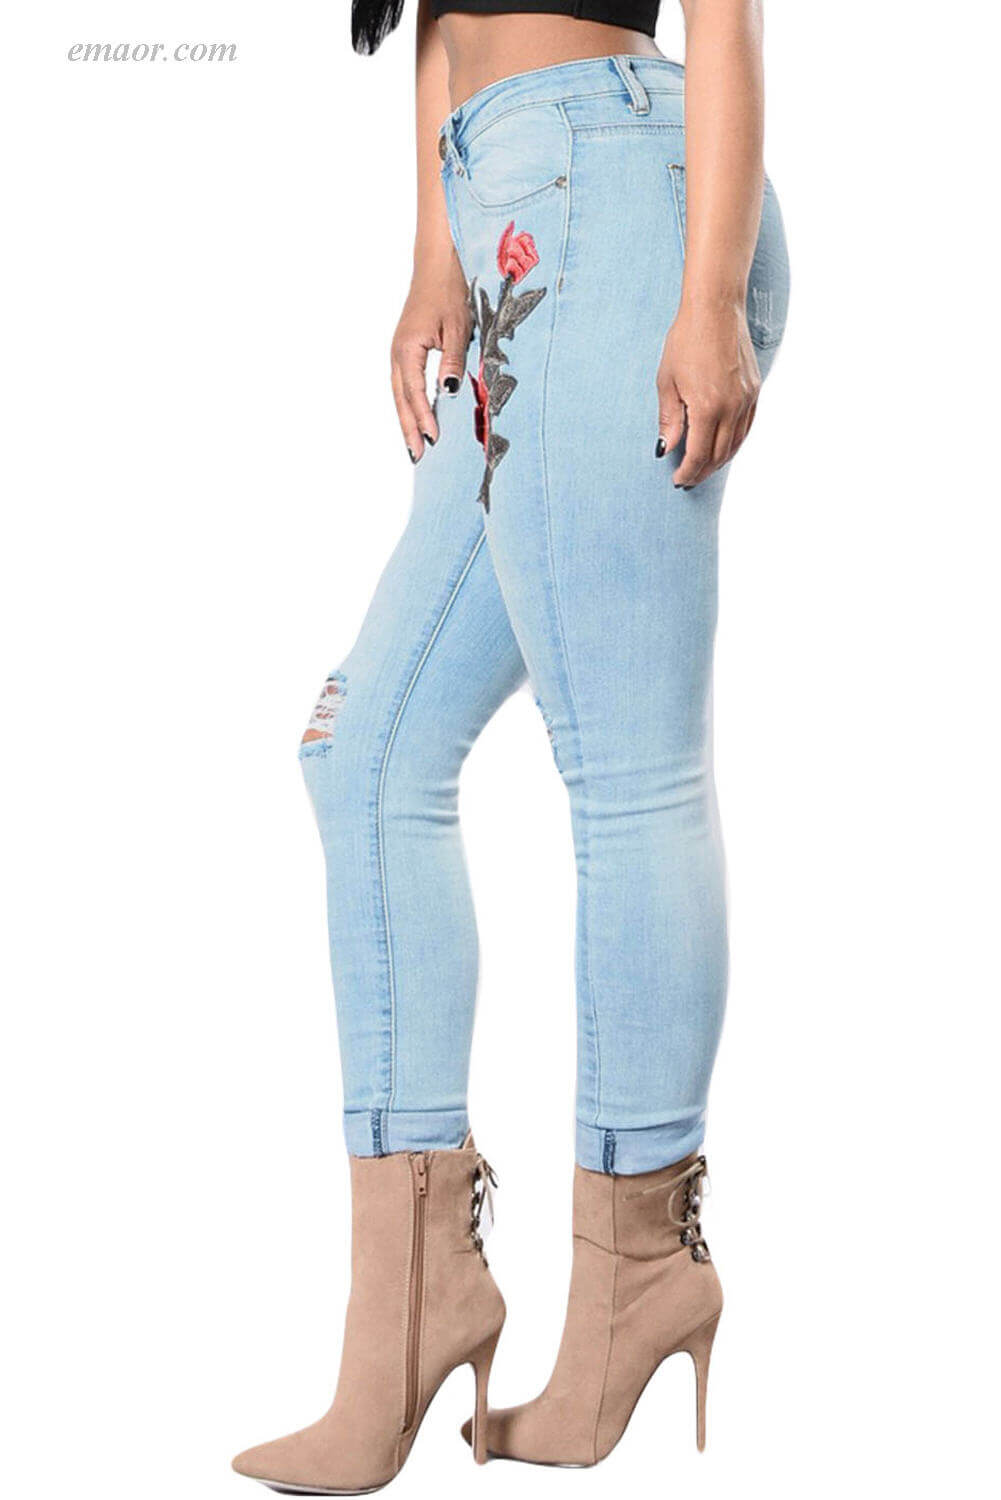 Fashion Nova Women's Ripped Skinny Girl Jeans